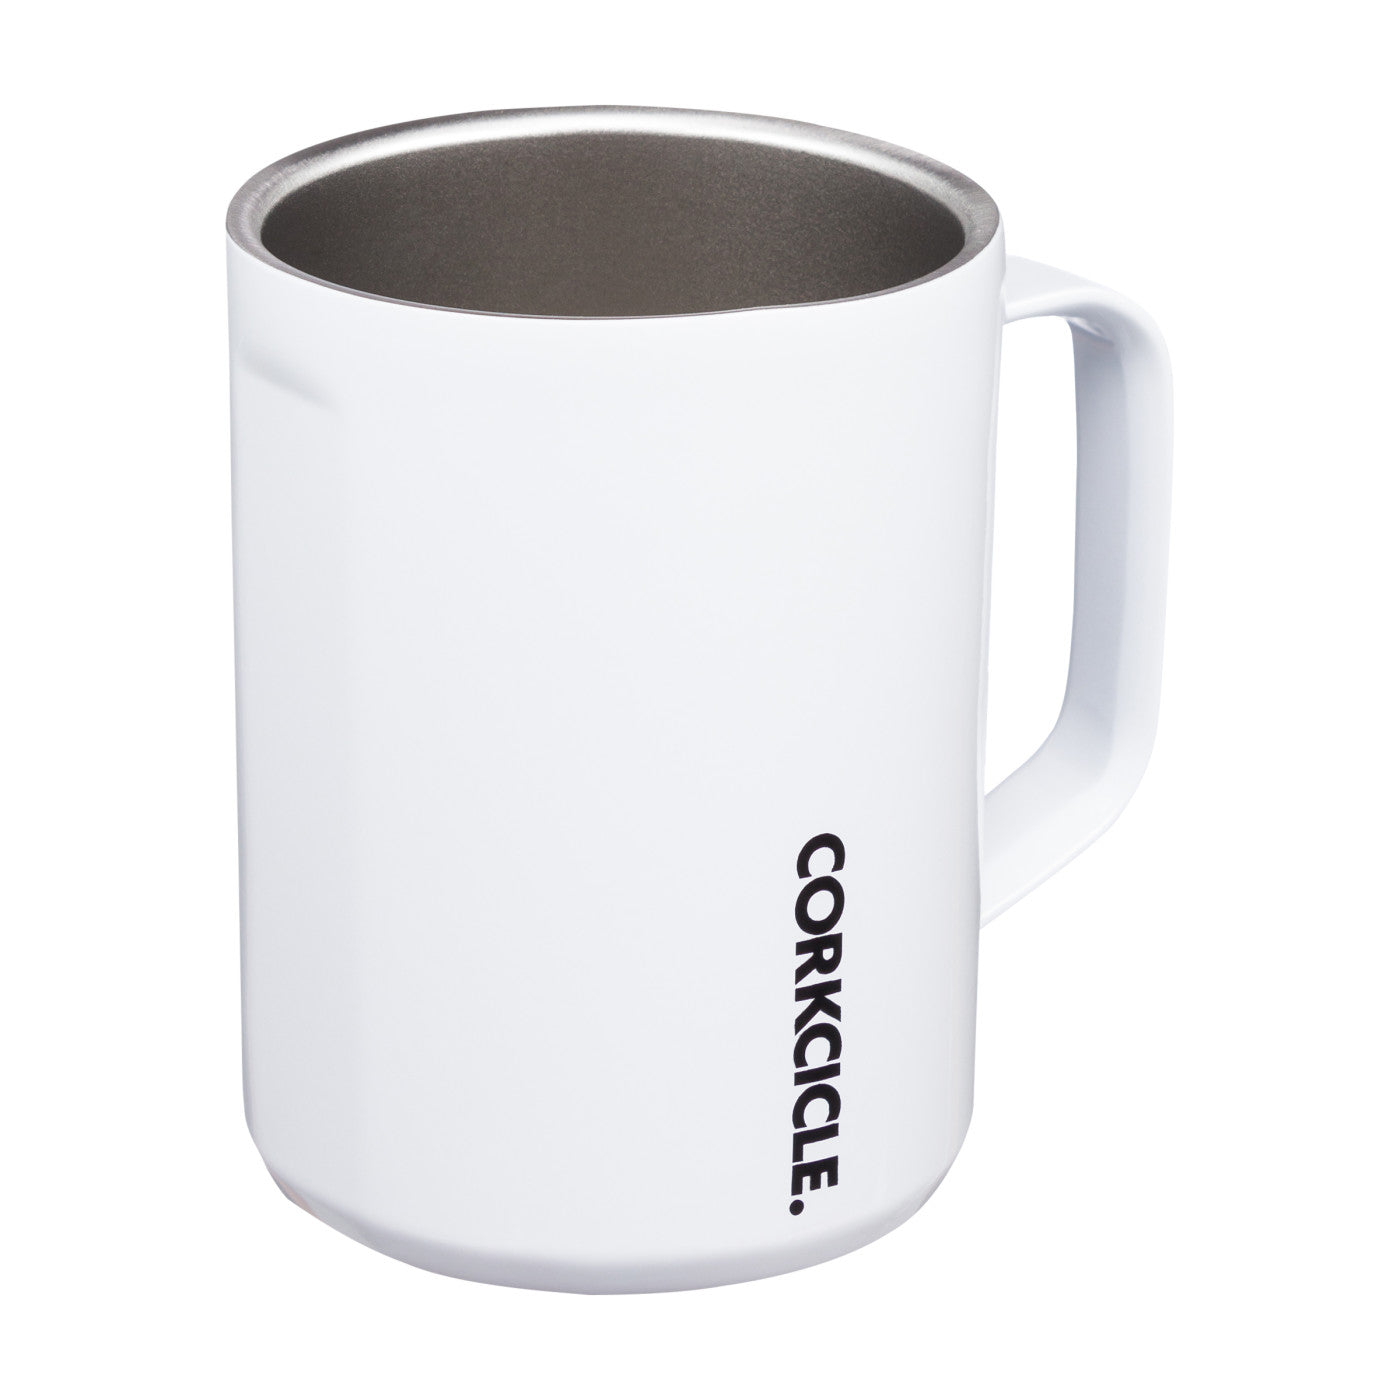 Corkcicle Coffee Mug 16 Oz., White